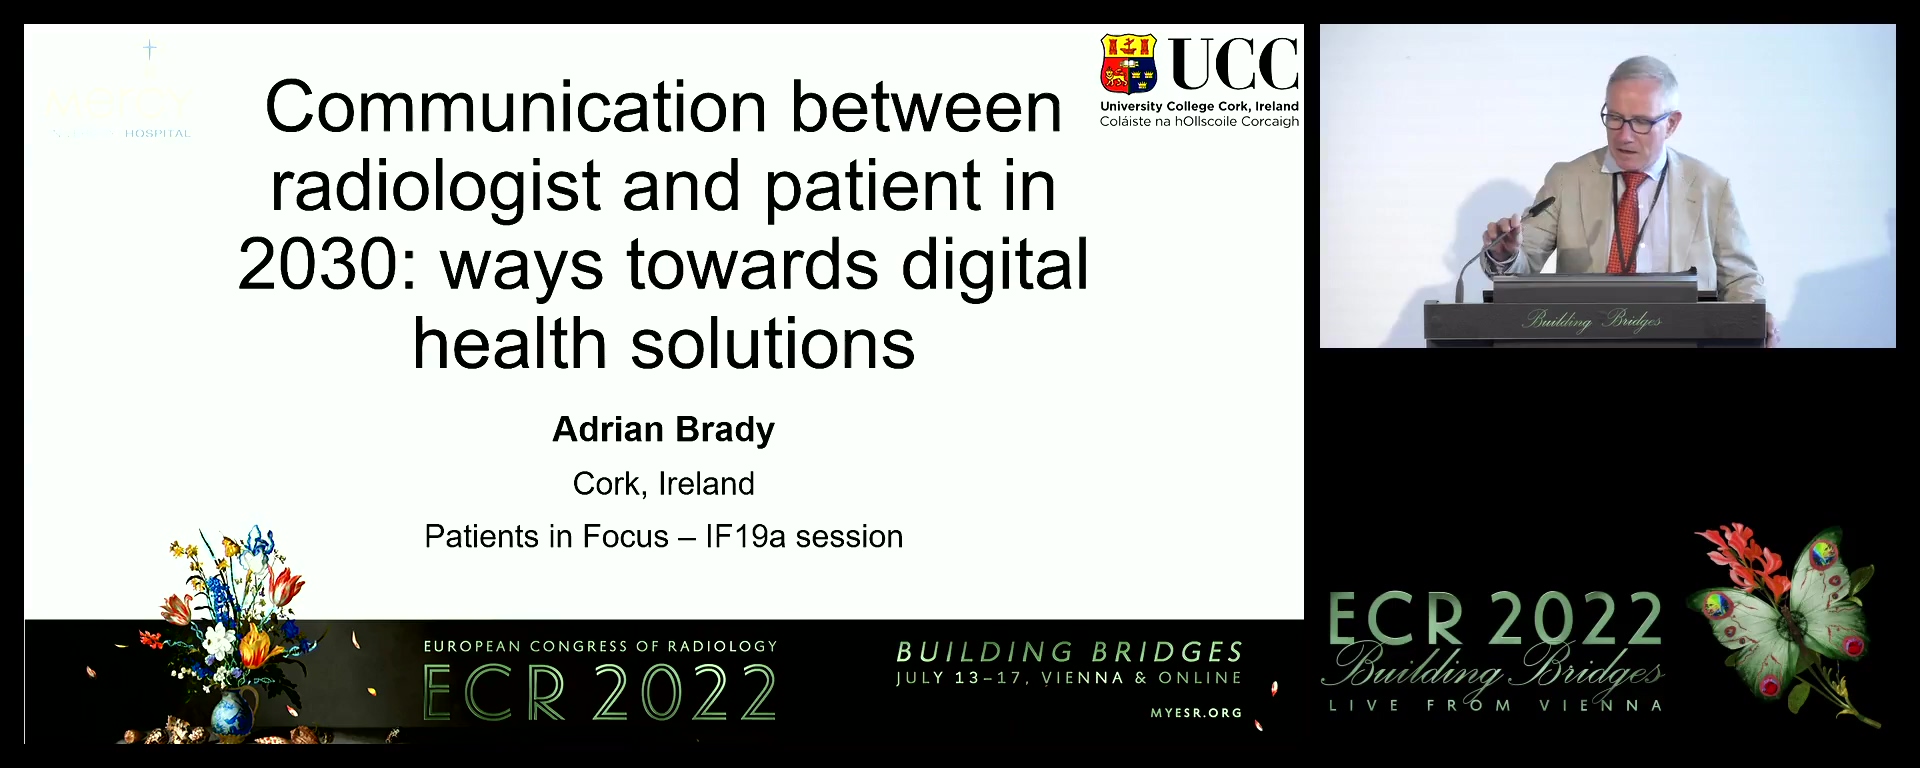 Introduction by the moderator - Adrian Brady, Cork / IE